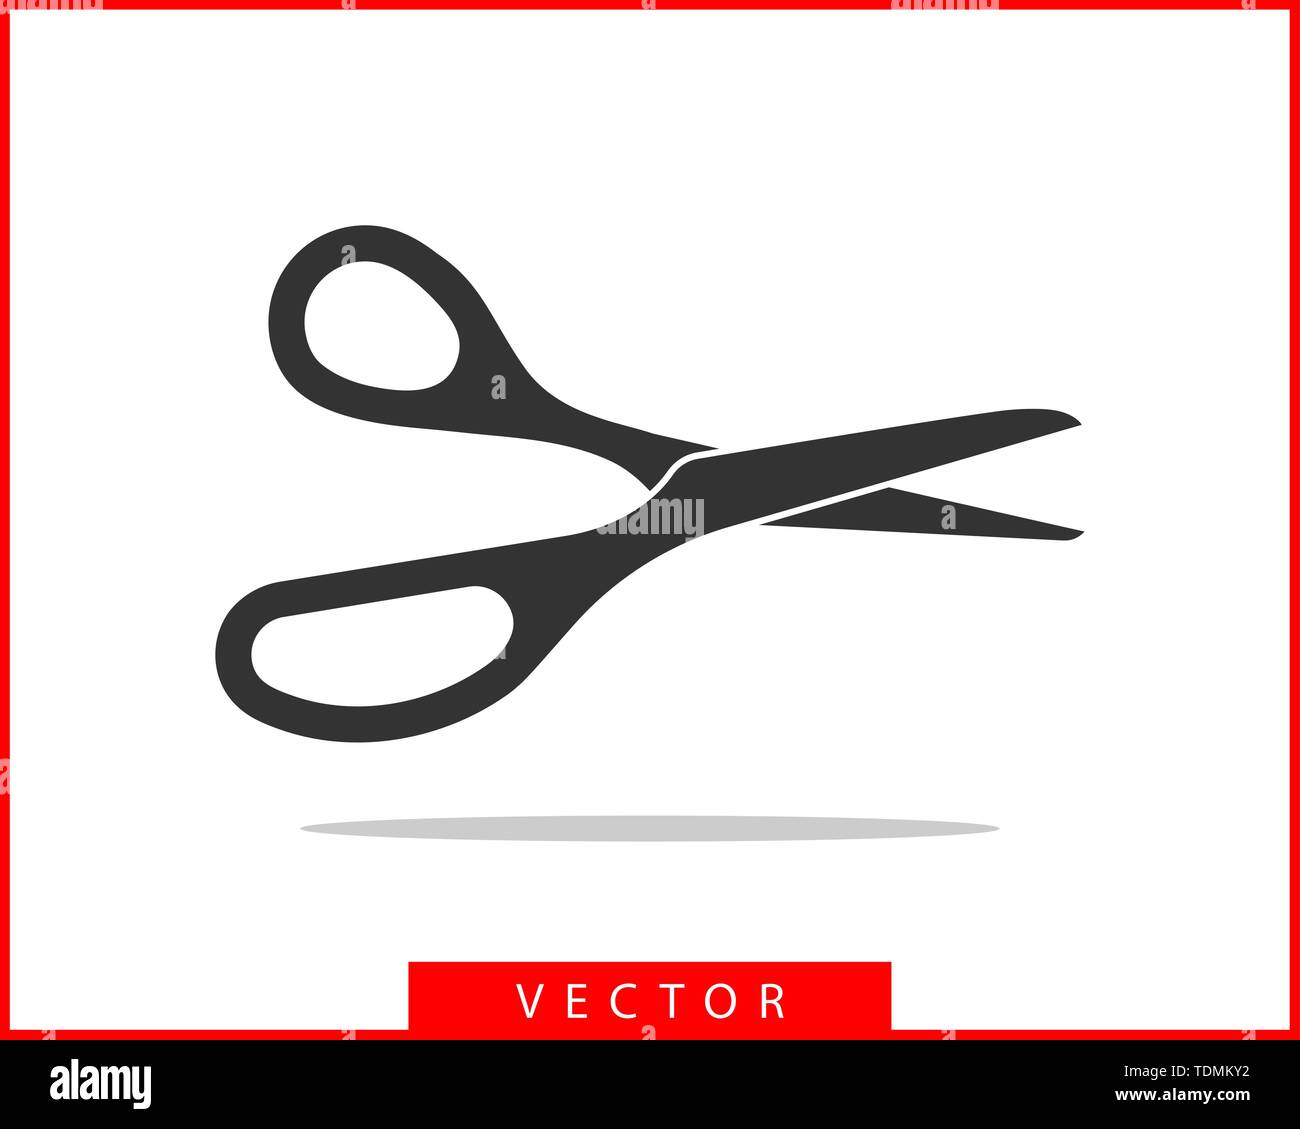 Scissor icon. Scissors vector design element or logo template. Black and white silhouette isolated. Stock Vector